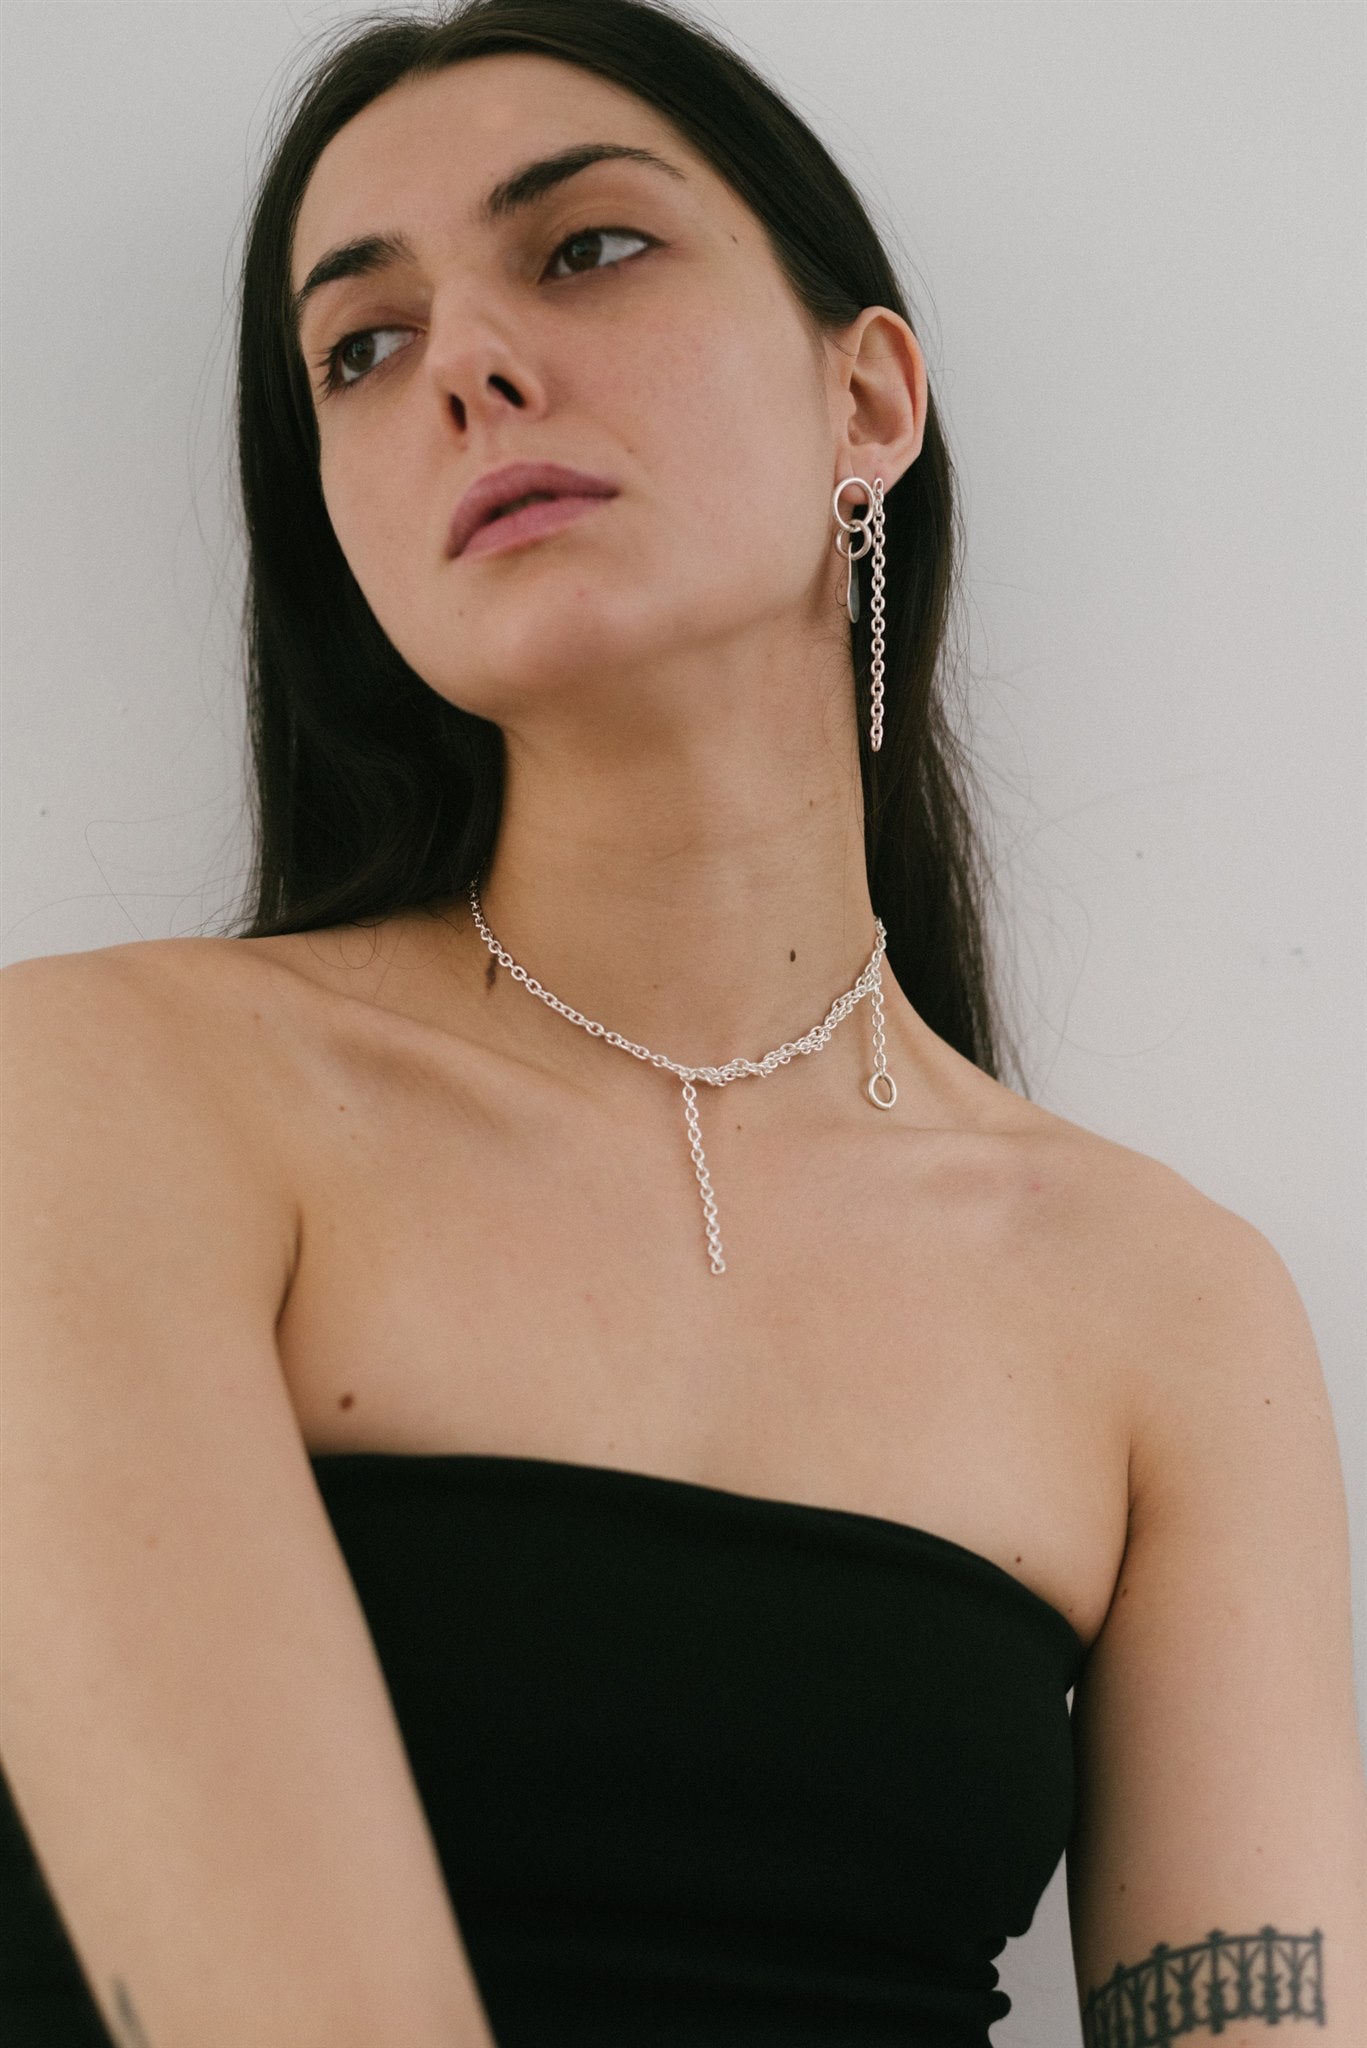 Liane necklace